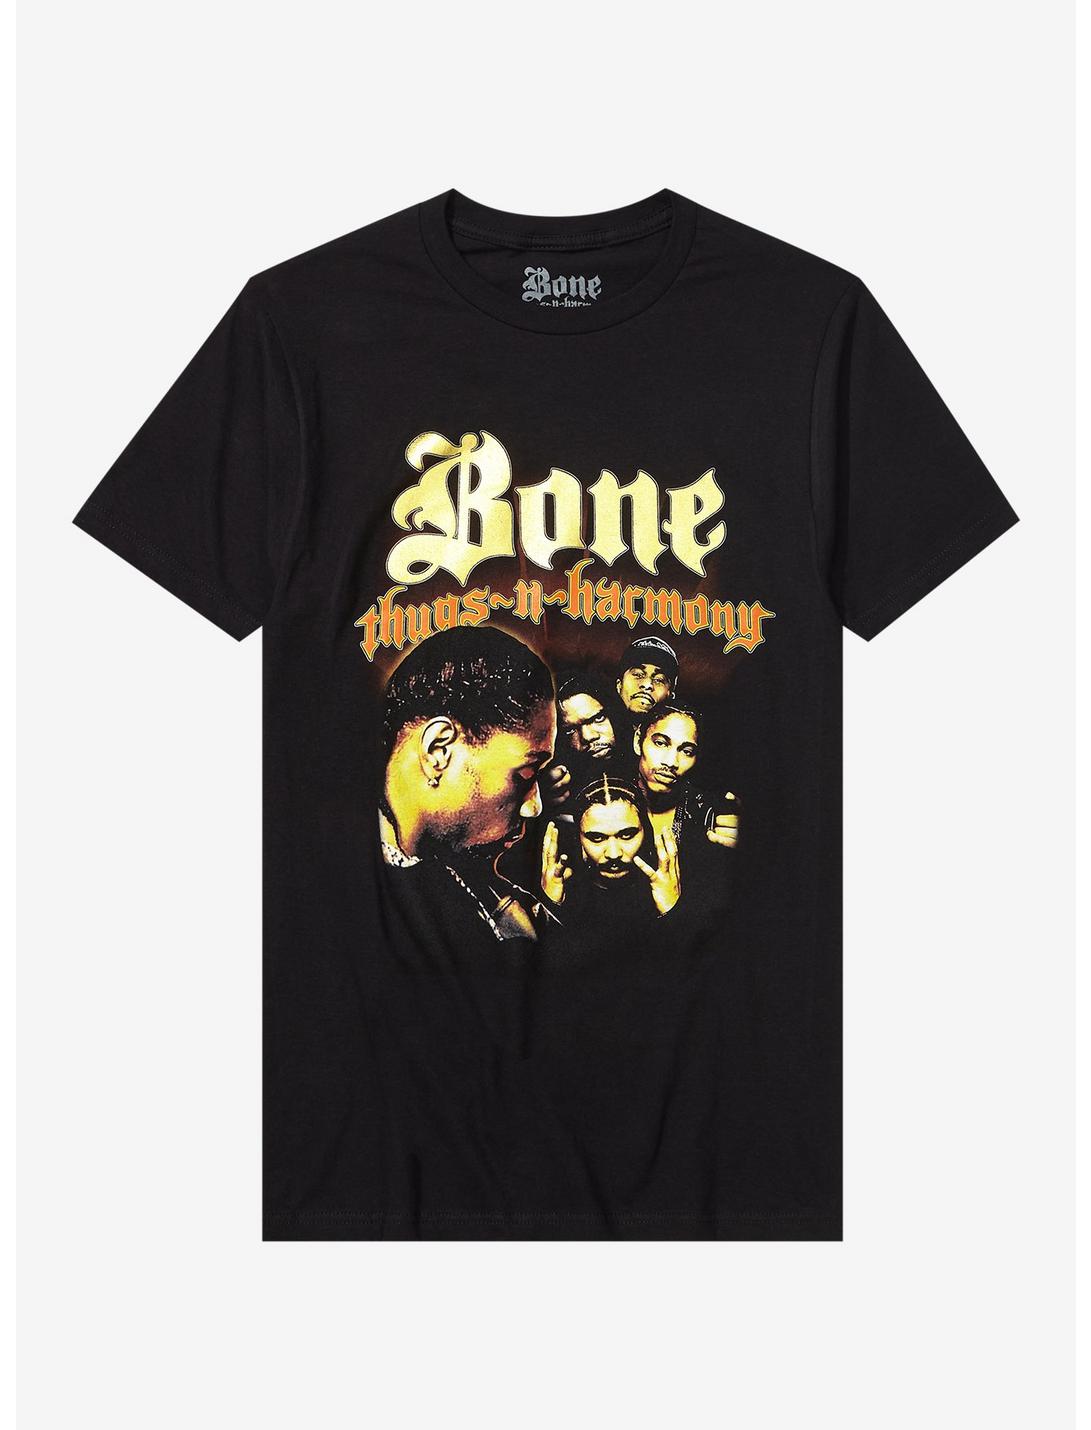 Bone Thugs-N-Harmony Group Boyfriend Fit Girls T-Shirt, BLACK, hi-res